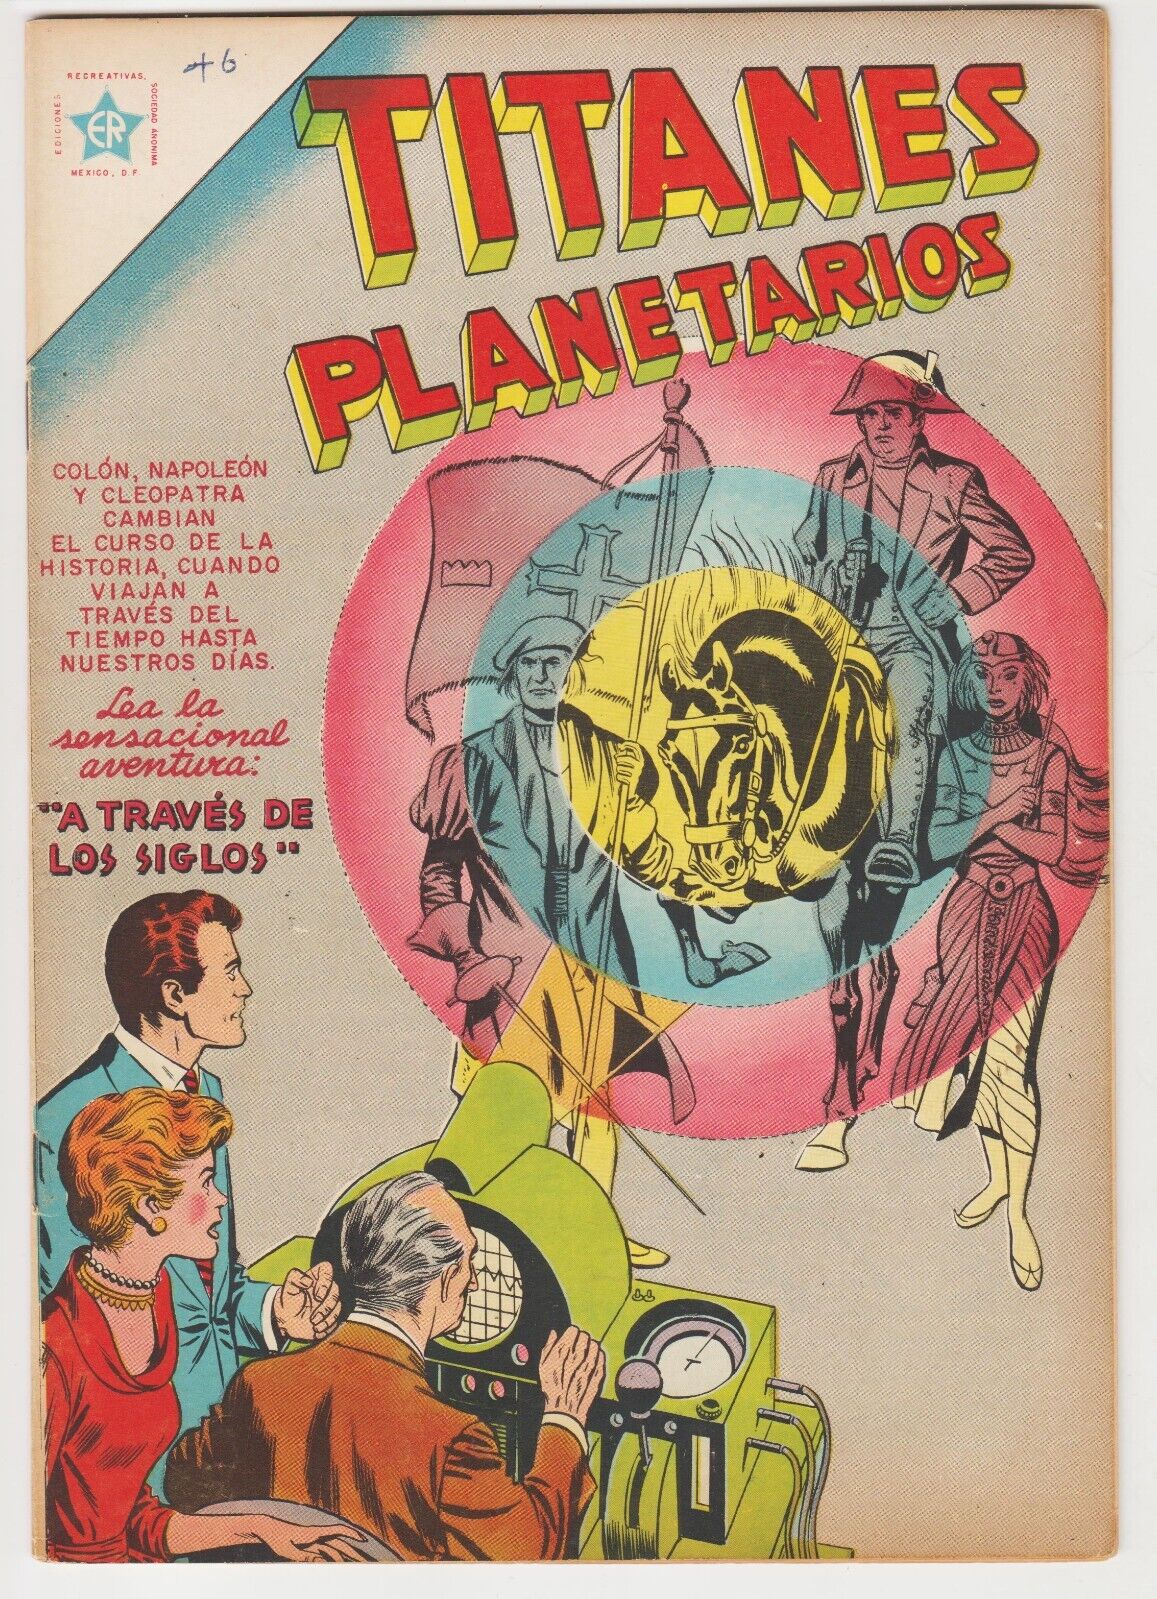 STRANGE ADVENTURES #60 MEXICAN EDITION 1957 TITANES PLANETARIOS #46 TIME TRAVEL